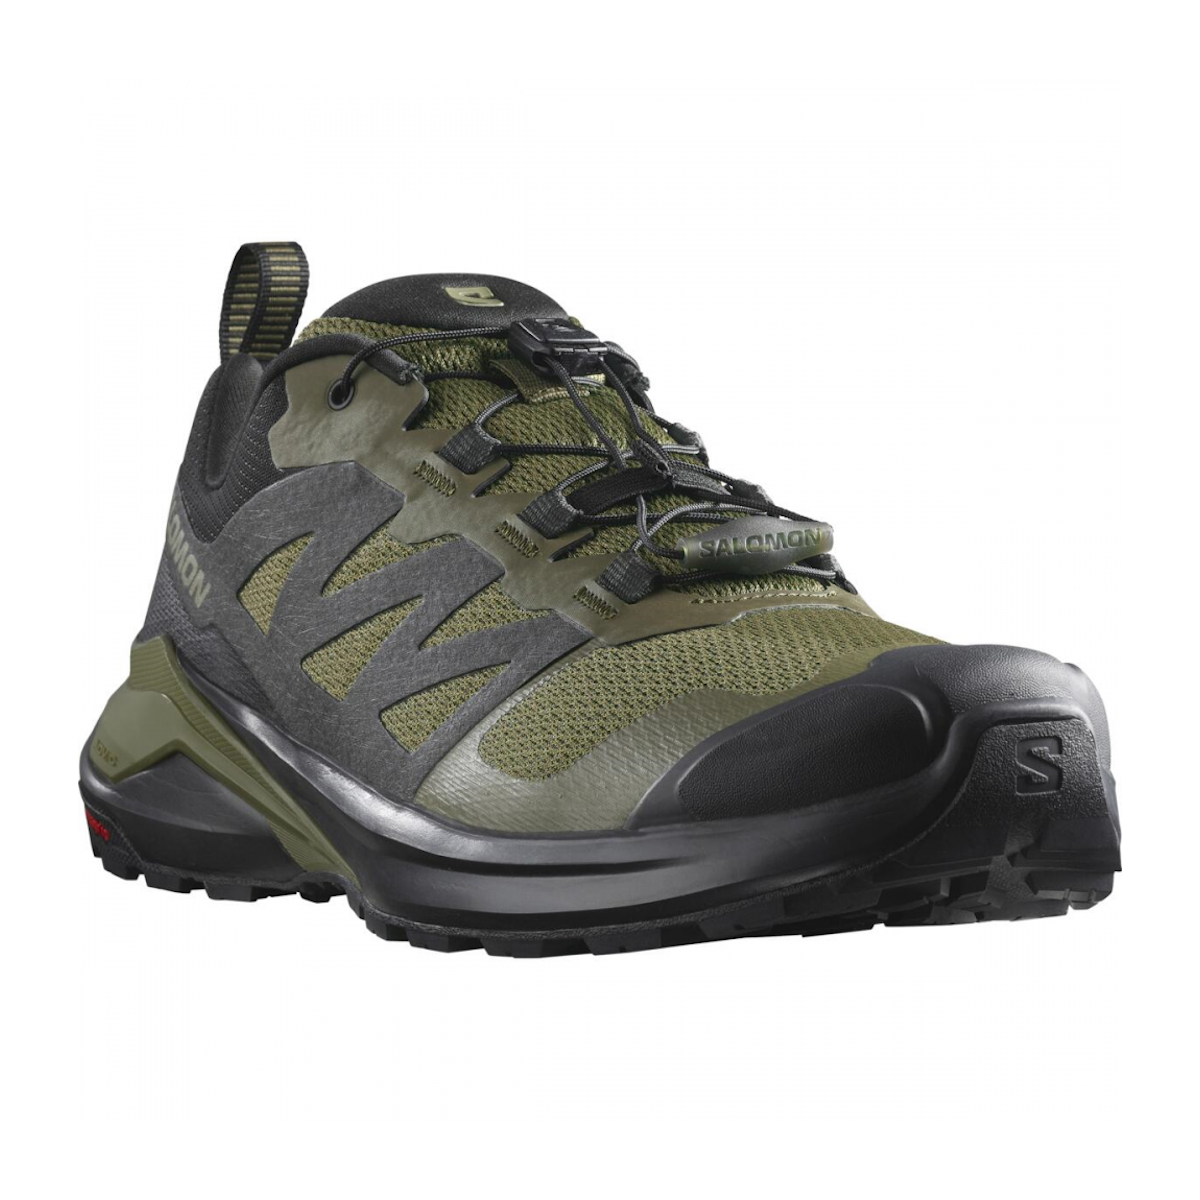 SALOMON X ADVENTURE trail running shoes - green/black